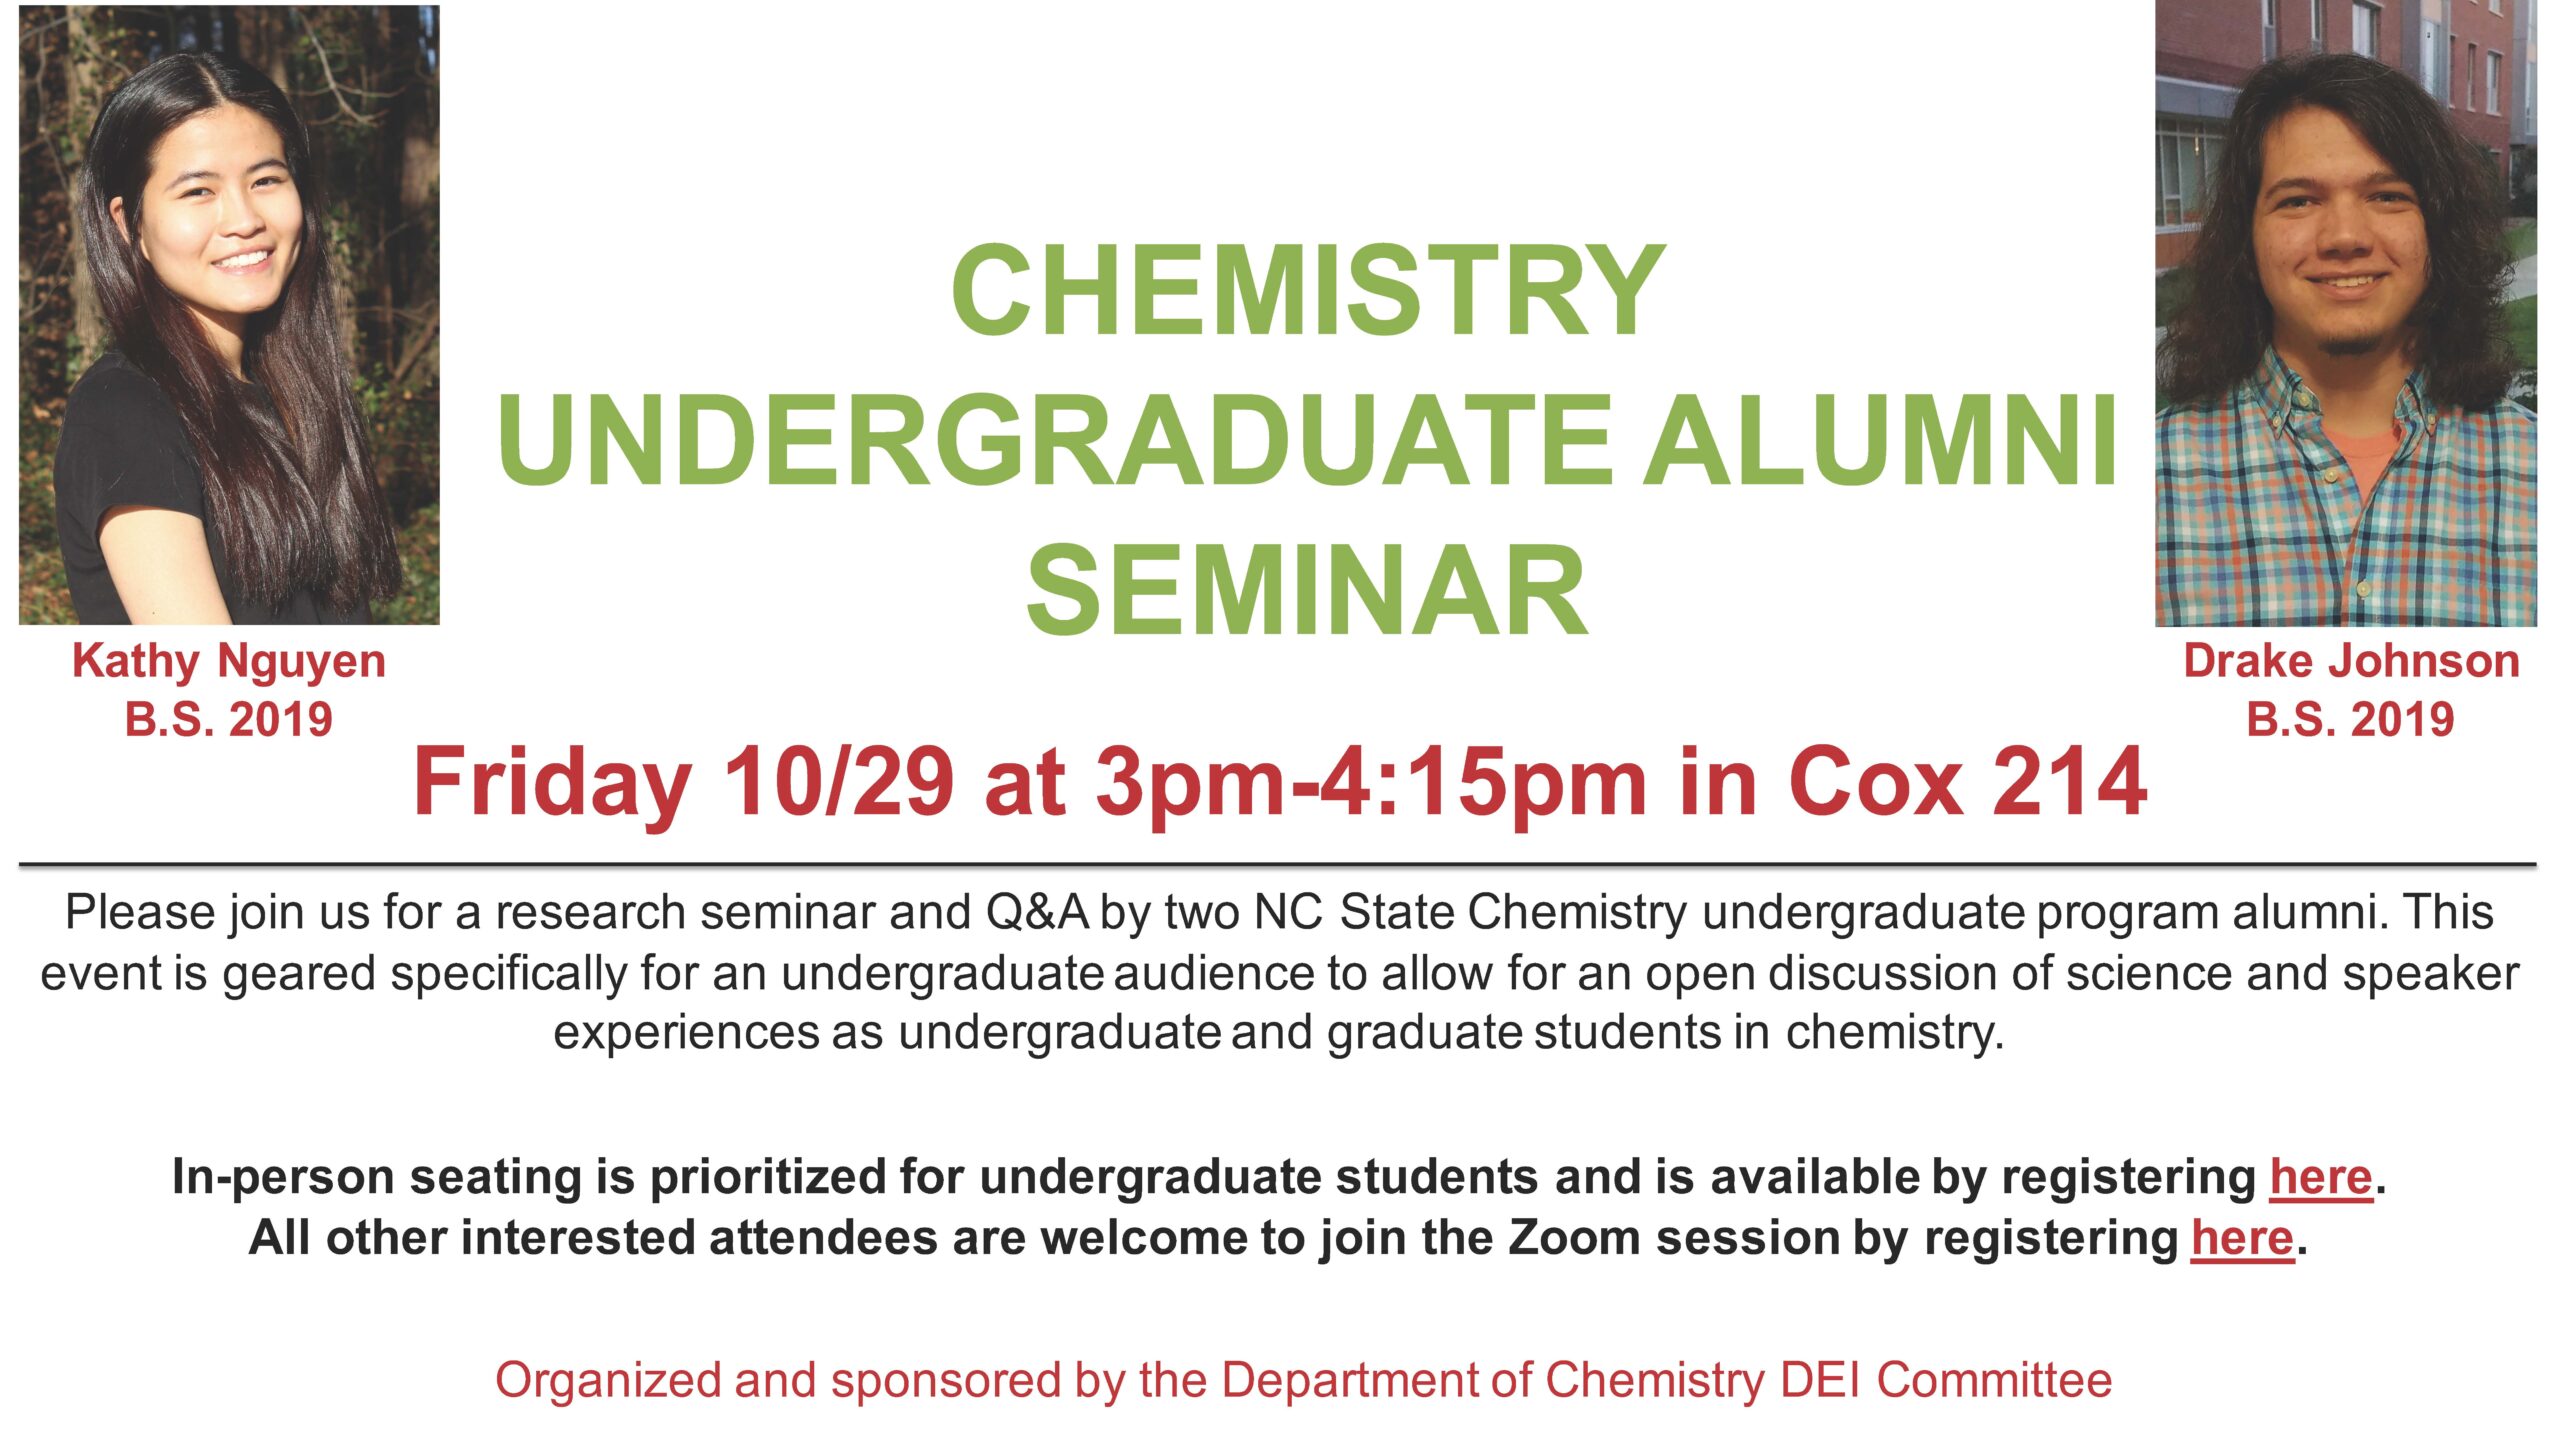 Chemistry Undergraduate Alumni Seminar Invitation Flyer featuring photographs of Kathy Nguyen, BS 2019, and Drake Johnson, BS 2019